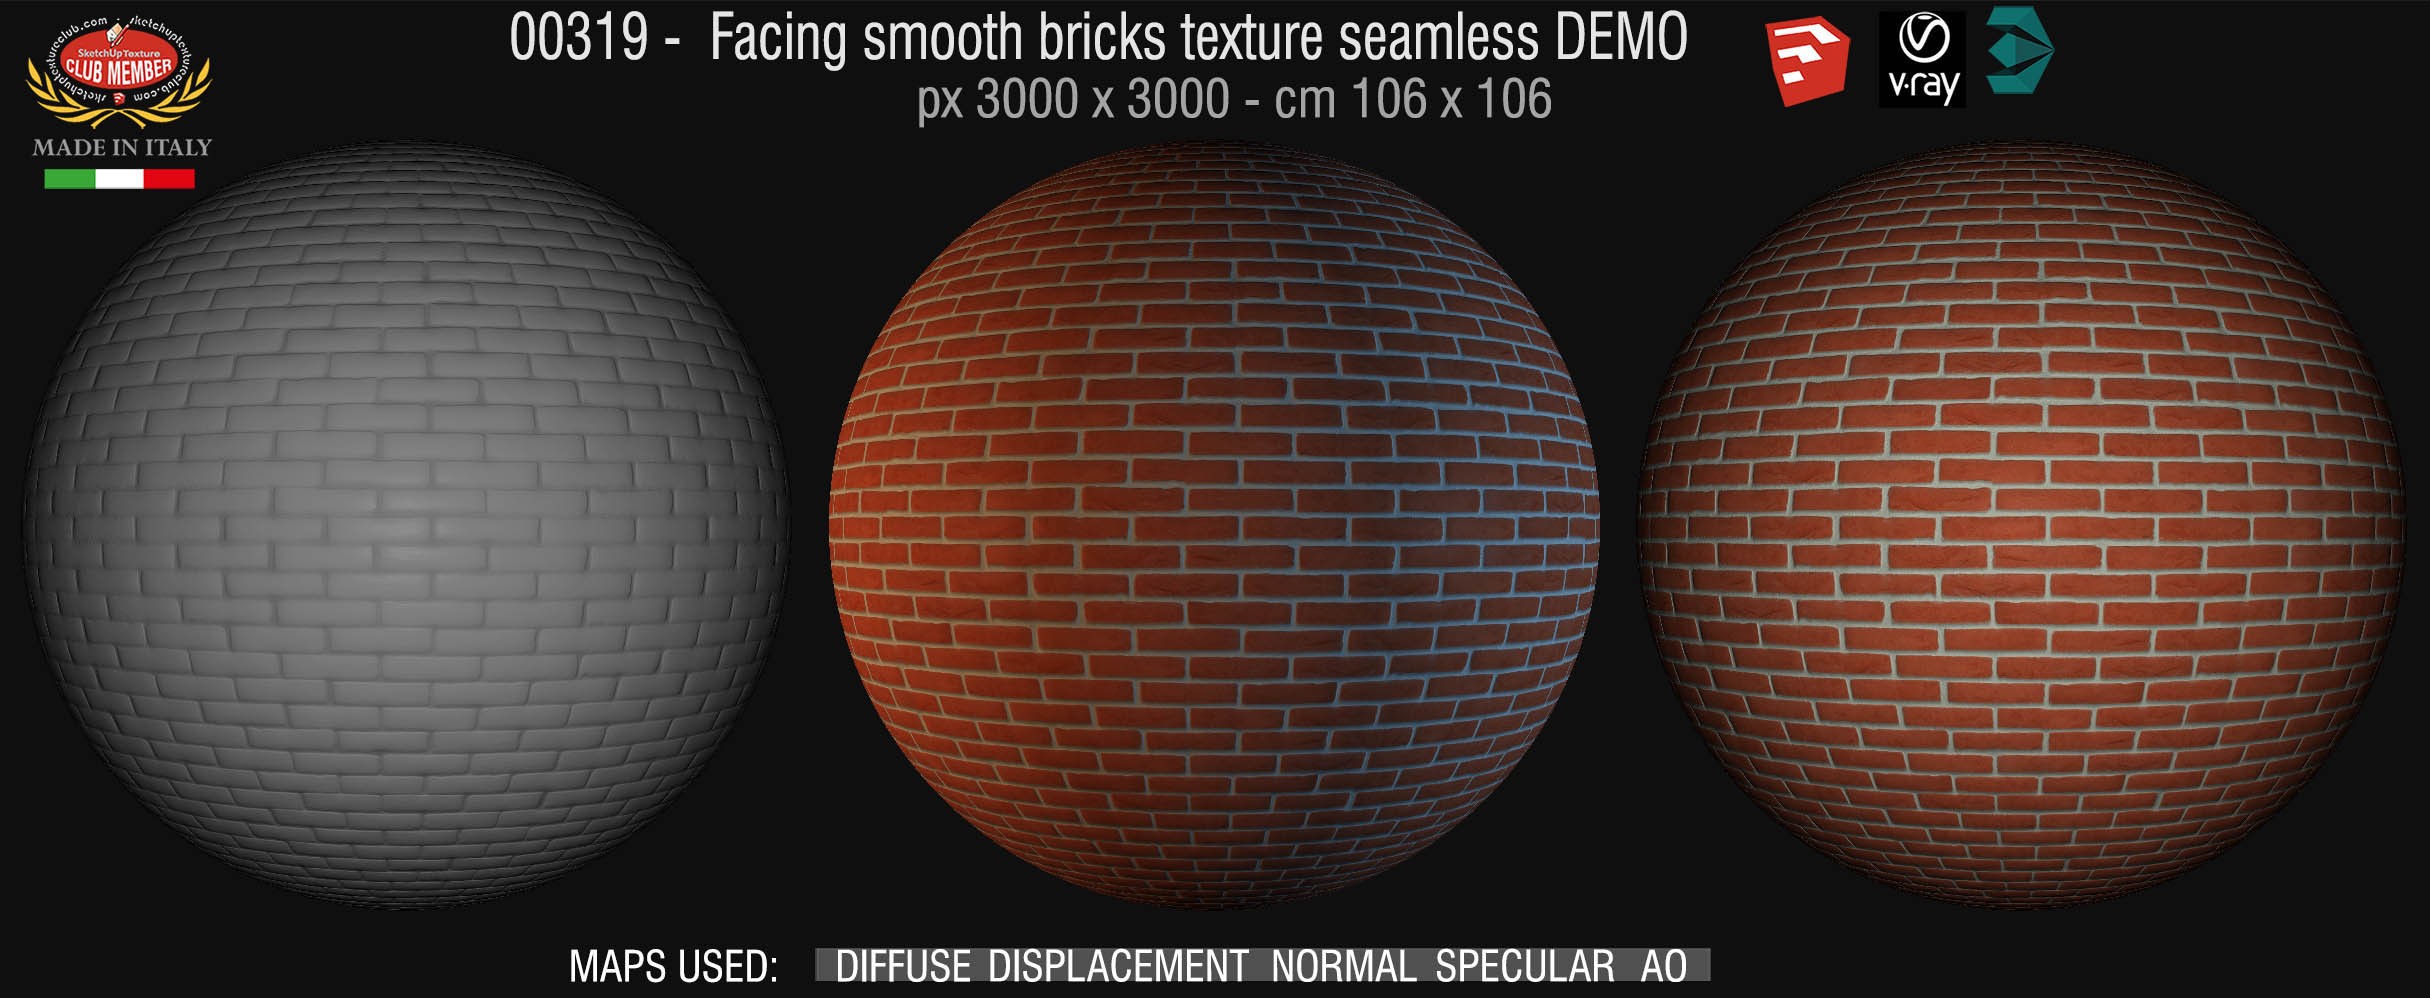 00319 Facing smooth bricks texture seamless + maps DEMO